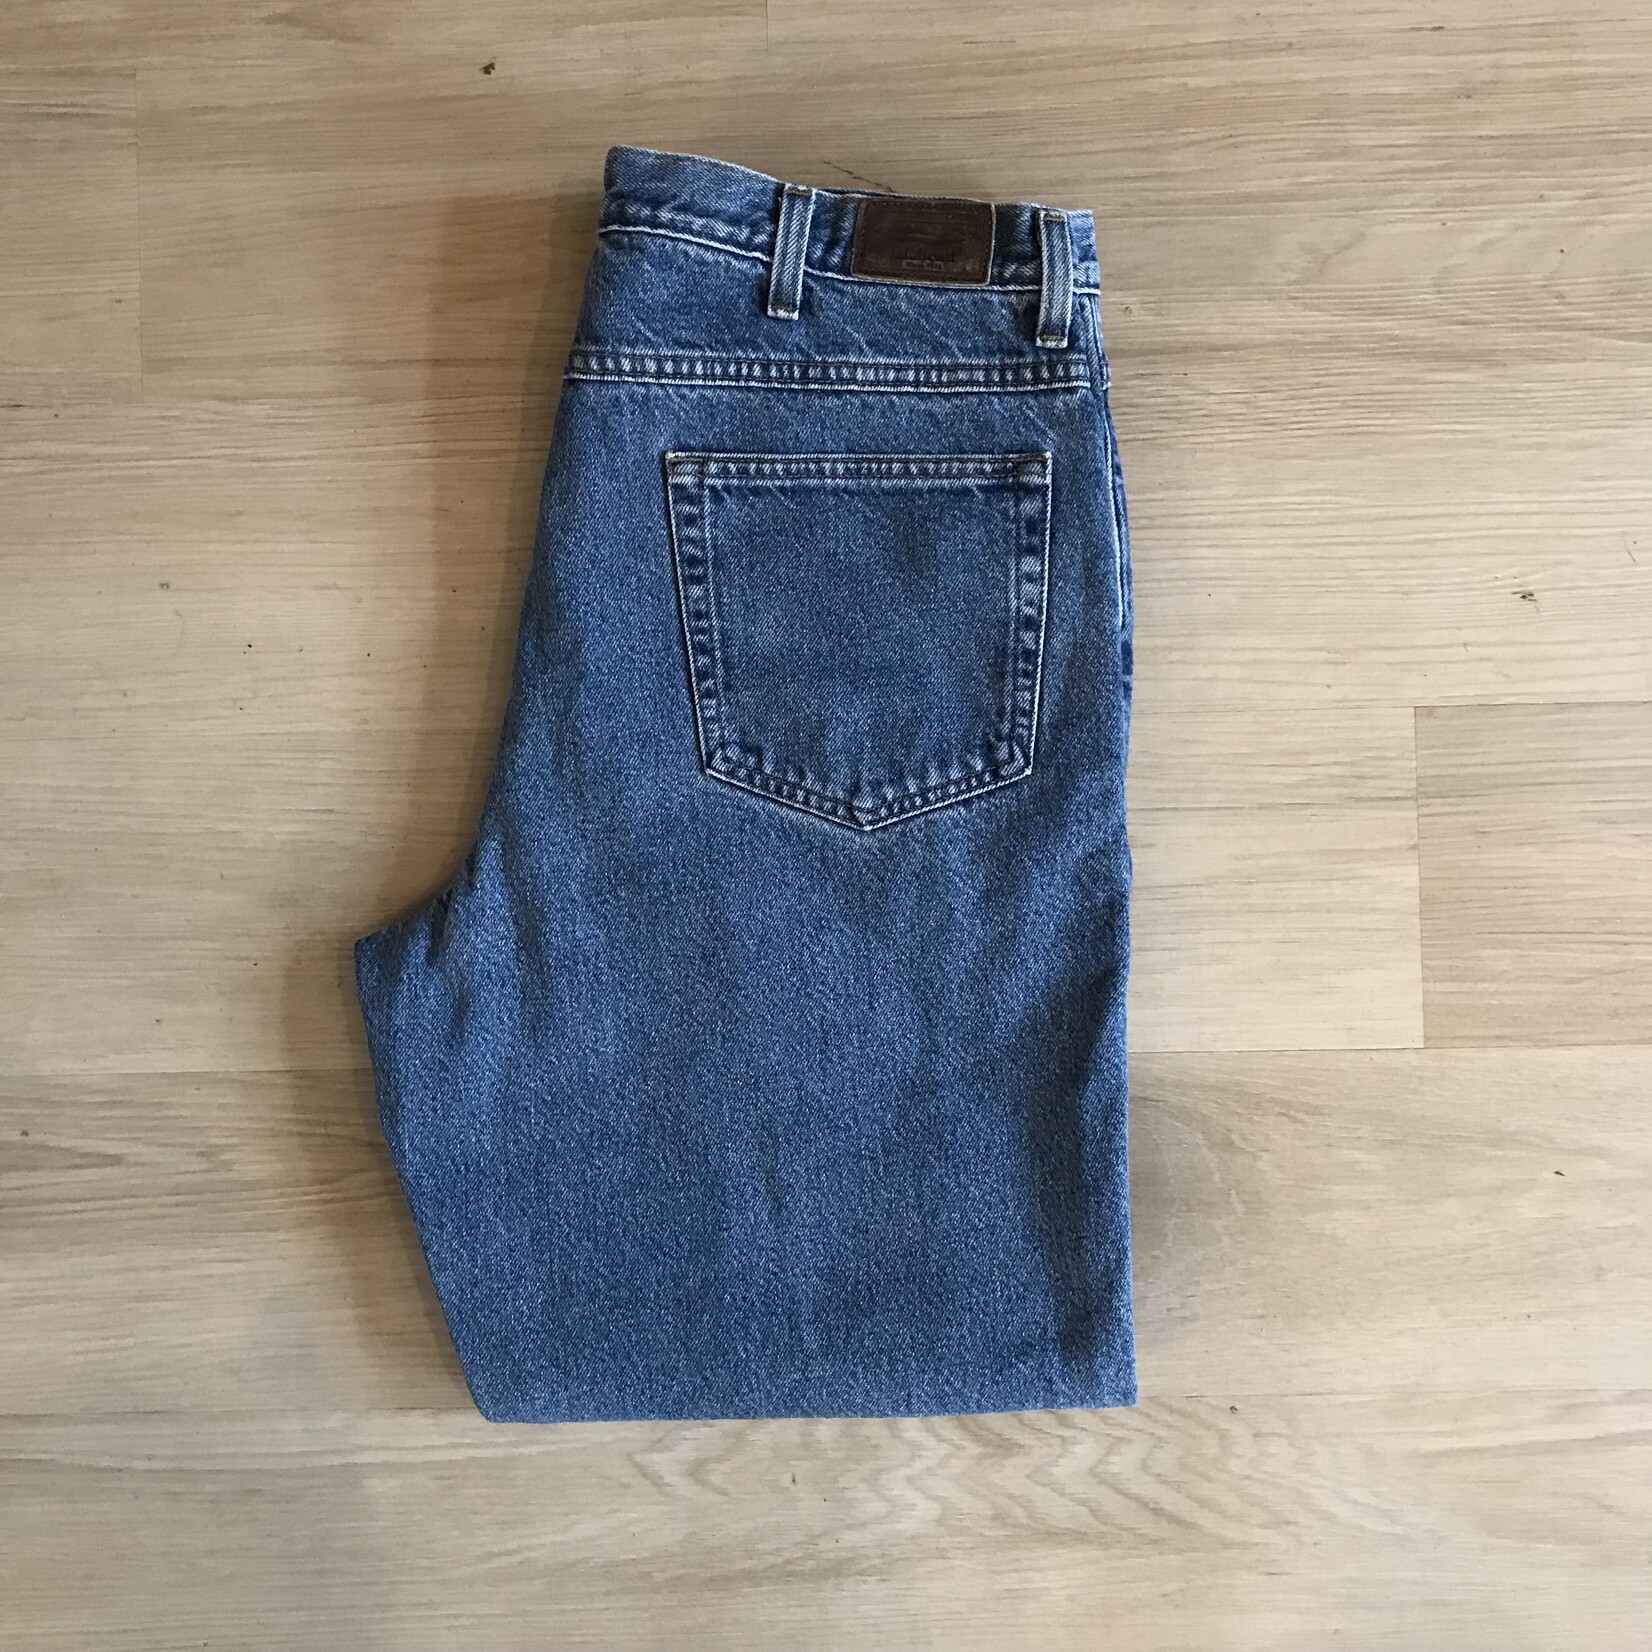 https://cdn.shoplightspeed.com/shops/639600/files/58647520/1652x1652x1/12095ll-bean-flannel-lined-jeans-sz-35-x-29.jpg